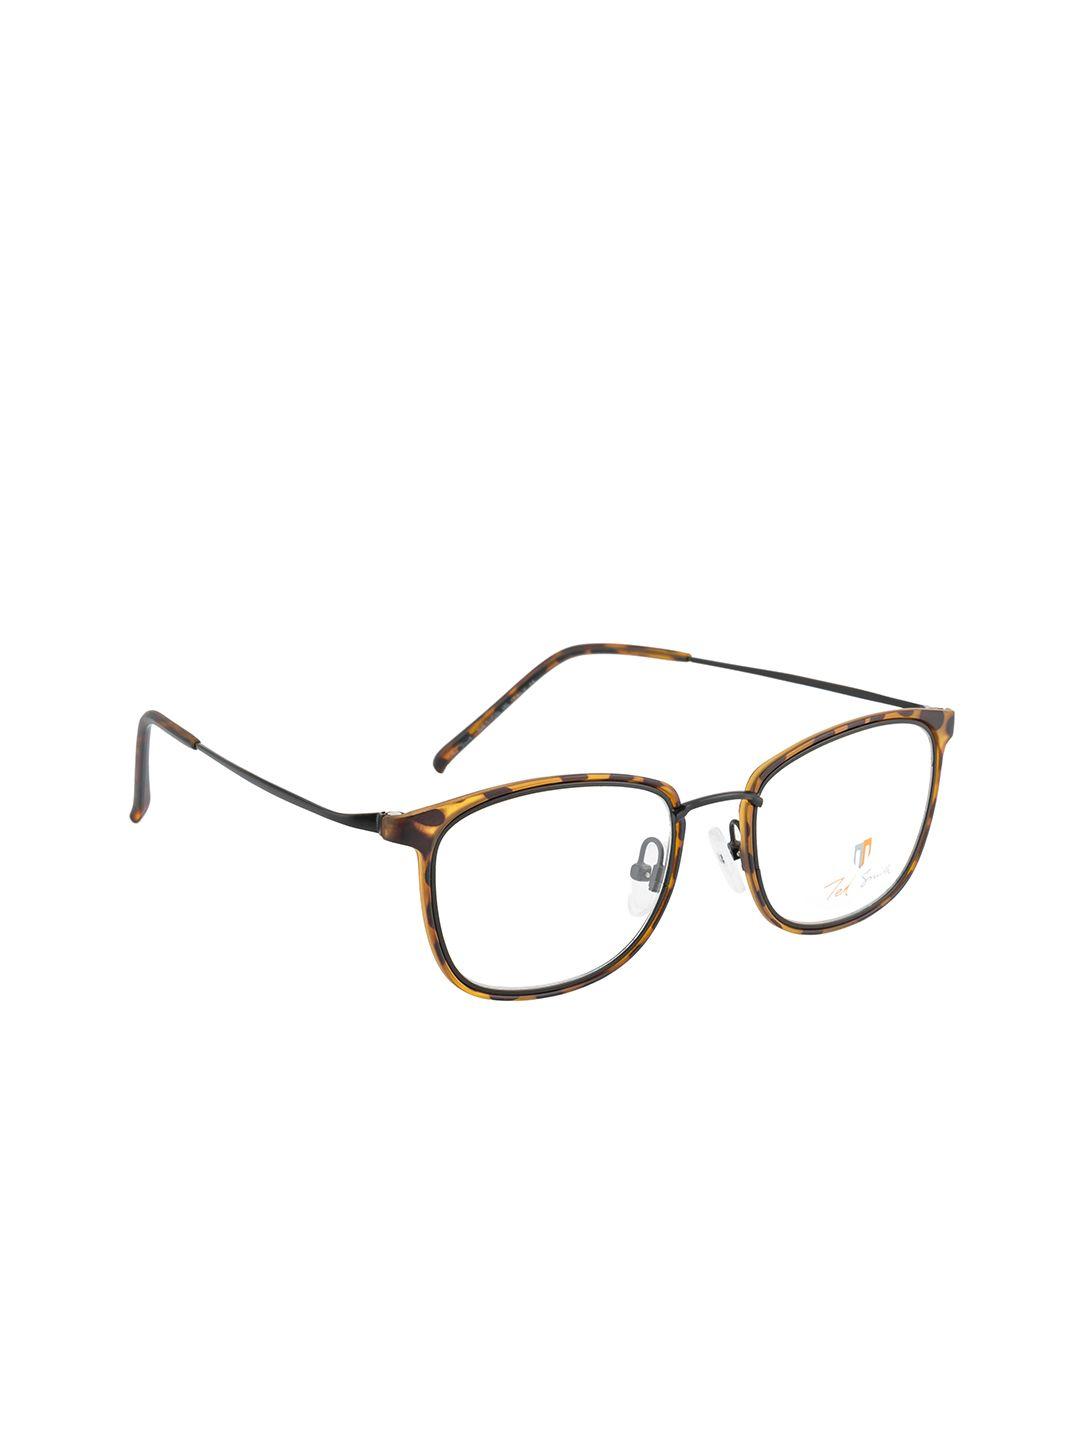 ted smith unisex brown & yellow full rim rectangle frames eyeglasses